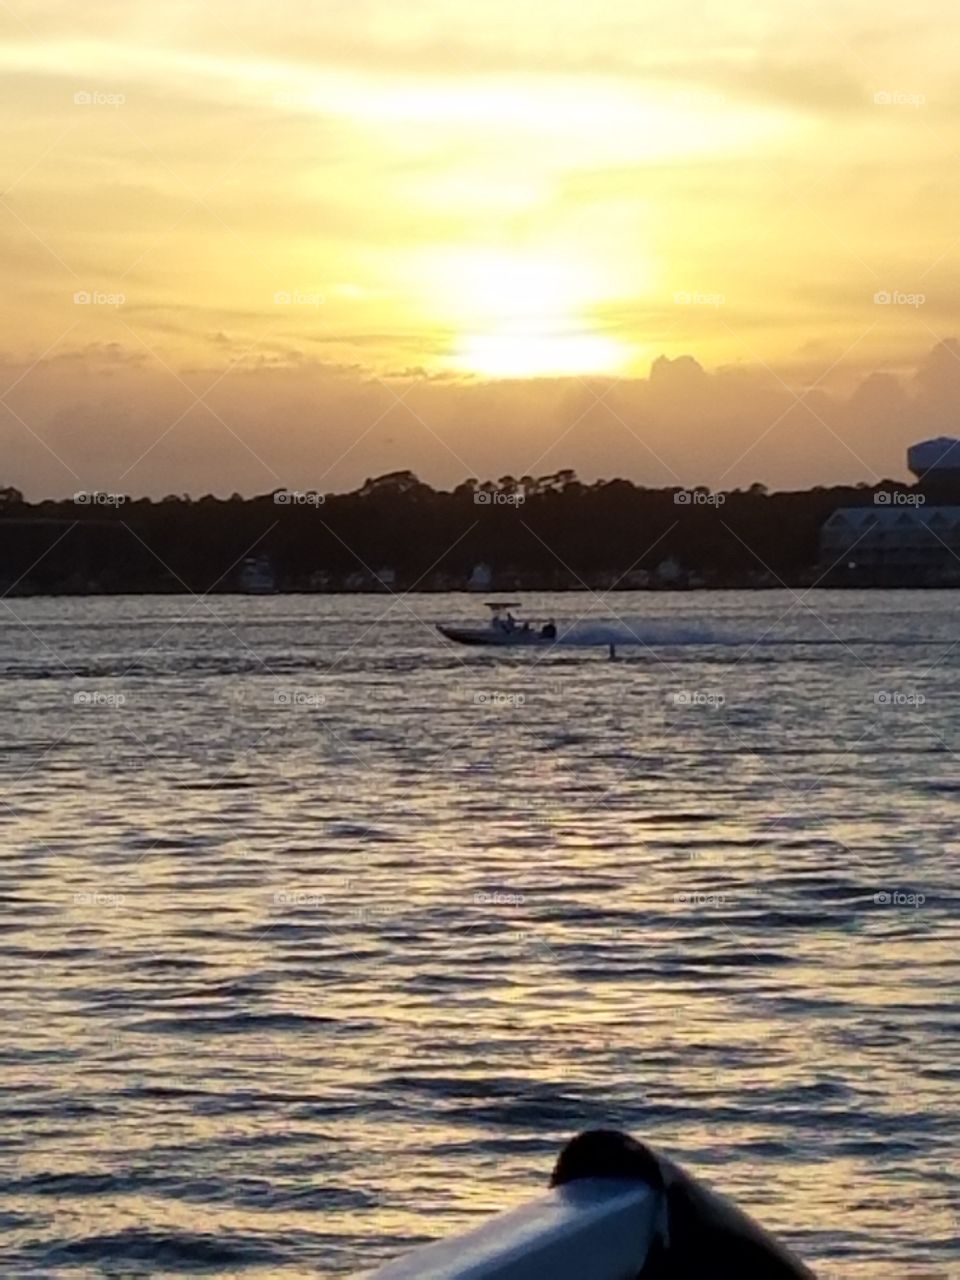 Sunset Florbama waters